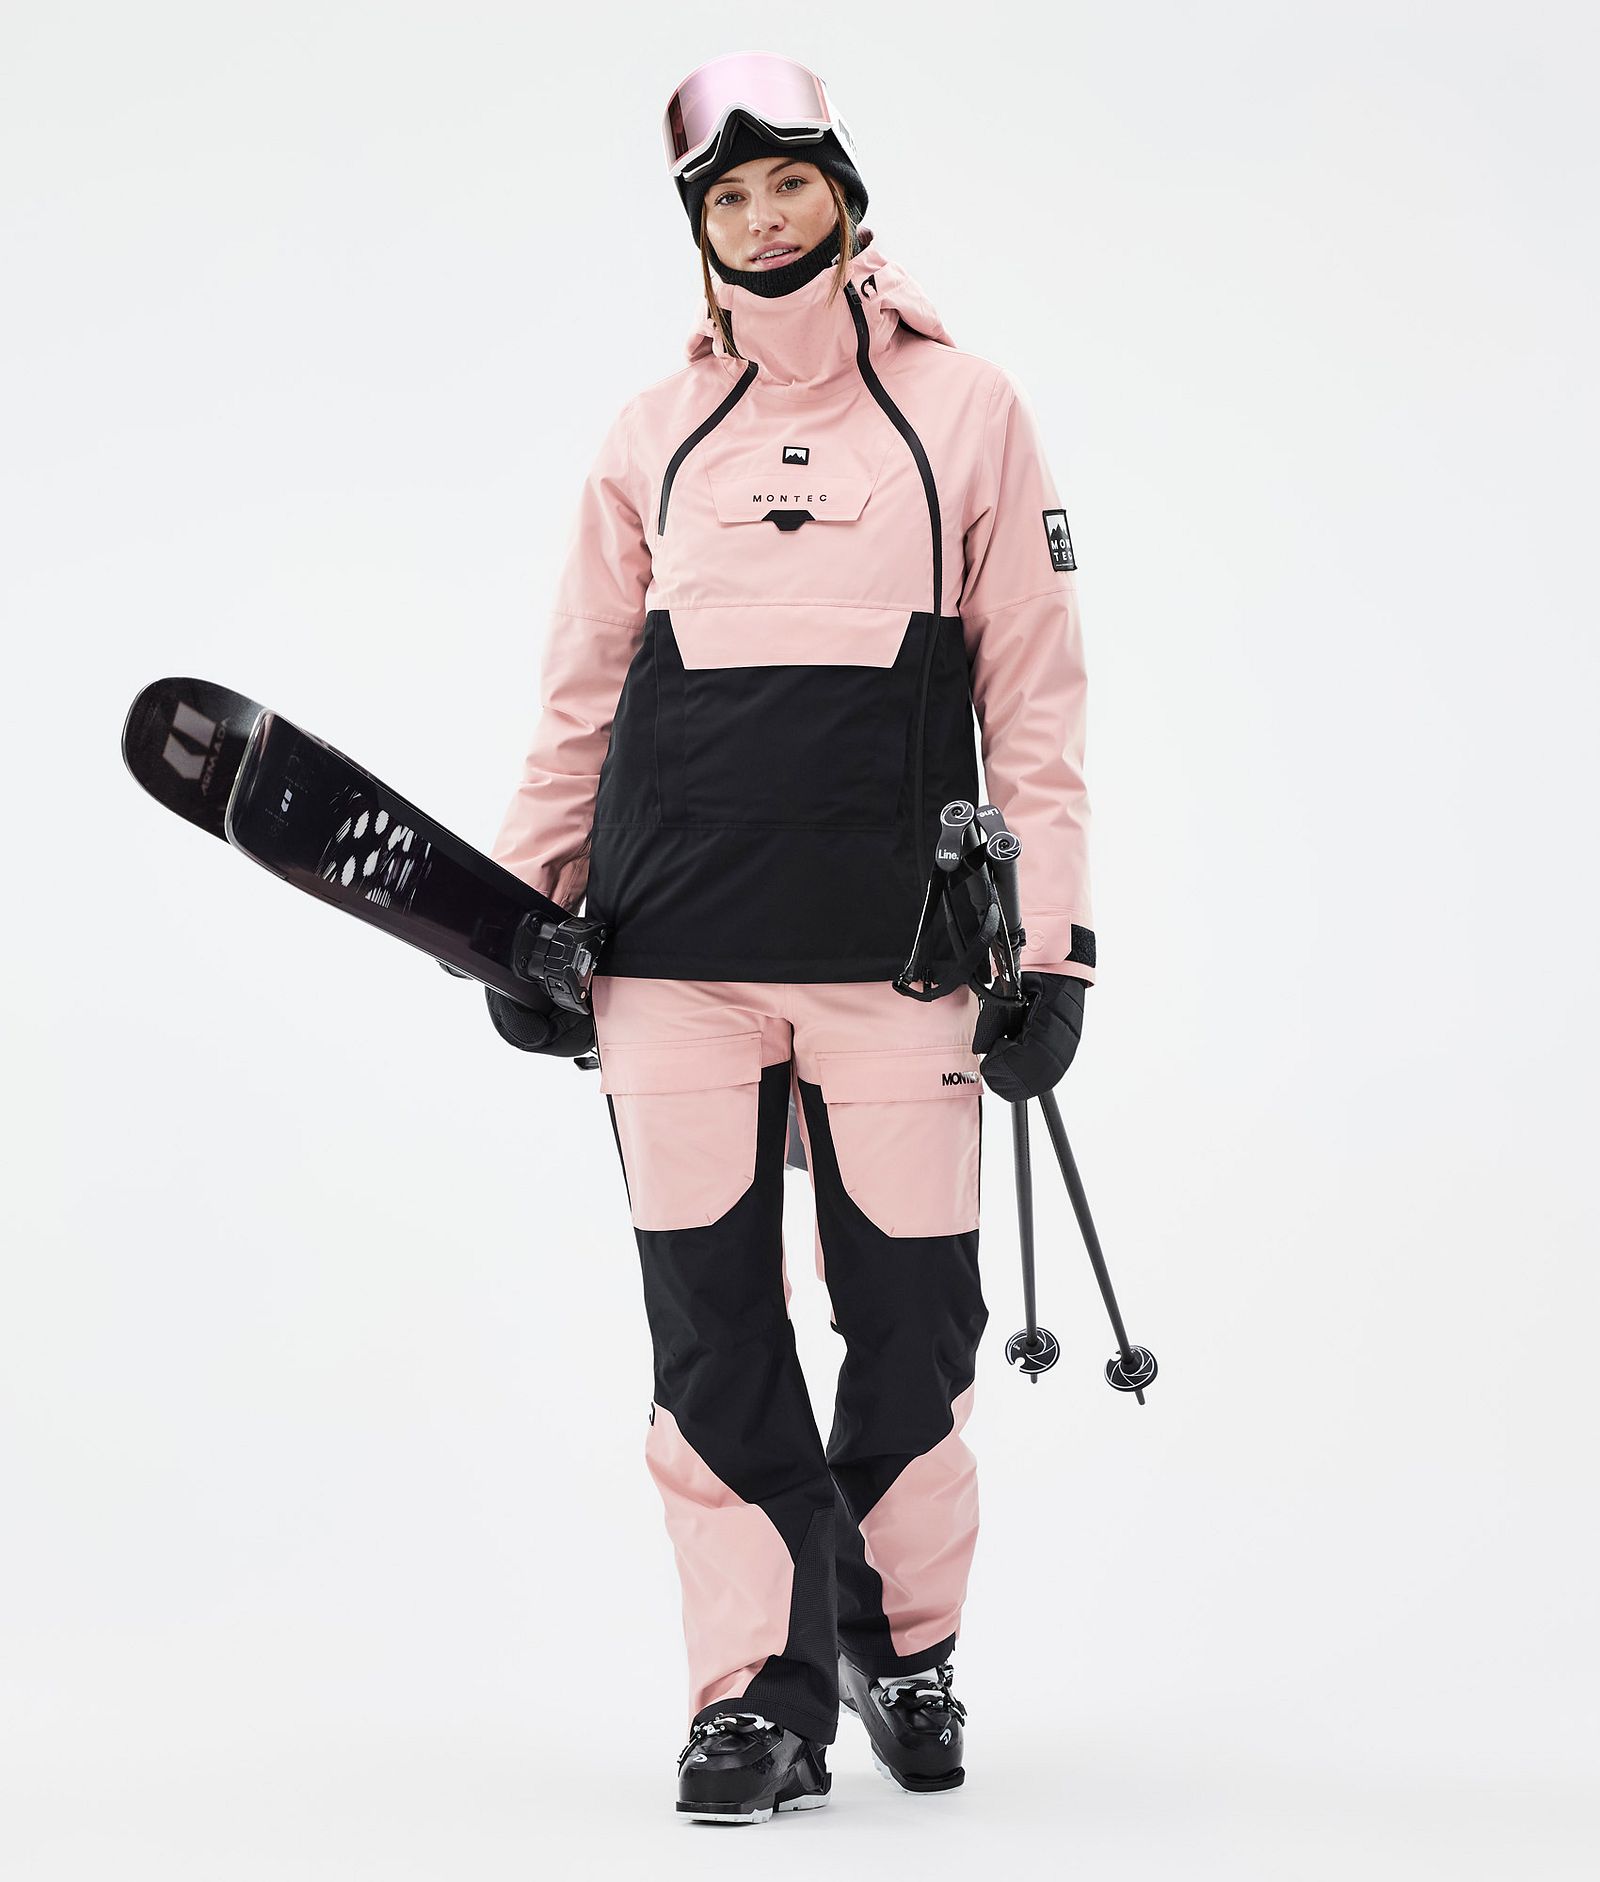 Montec Fawk W Pantalon de Ski Femme Soft Pink/ Black